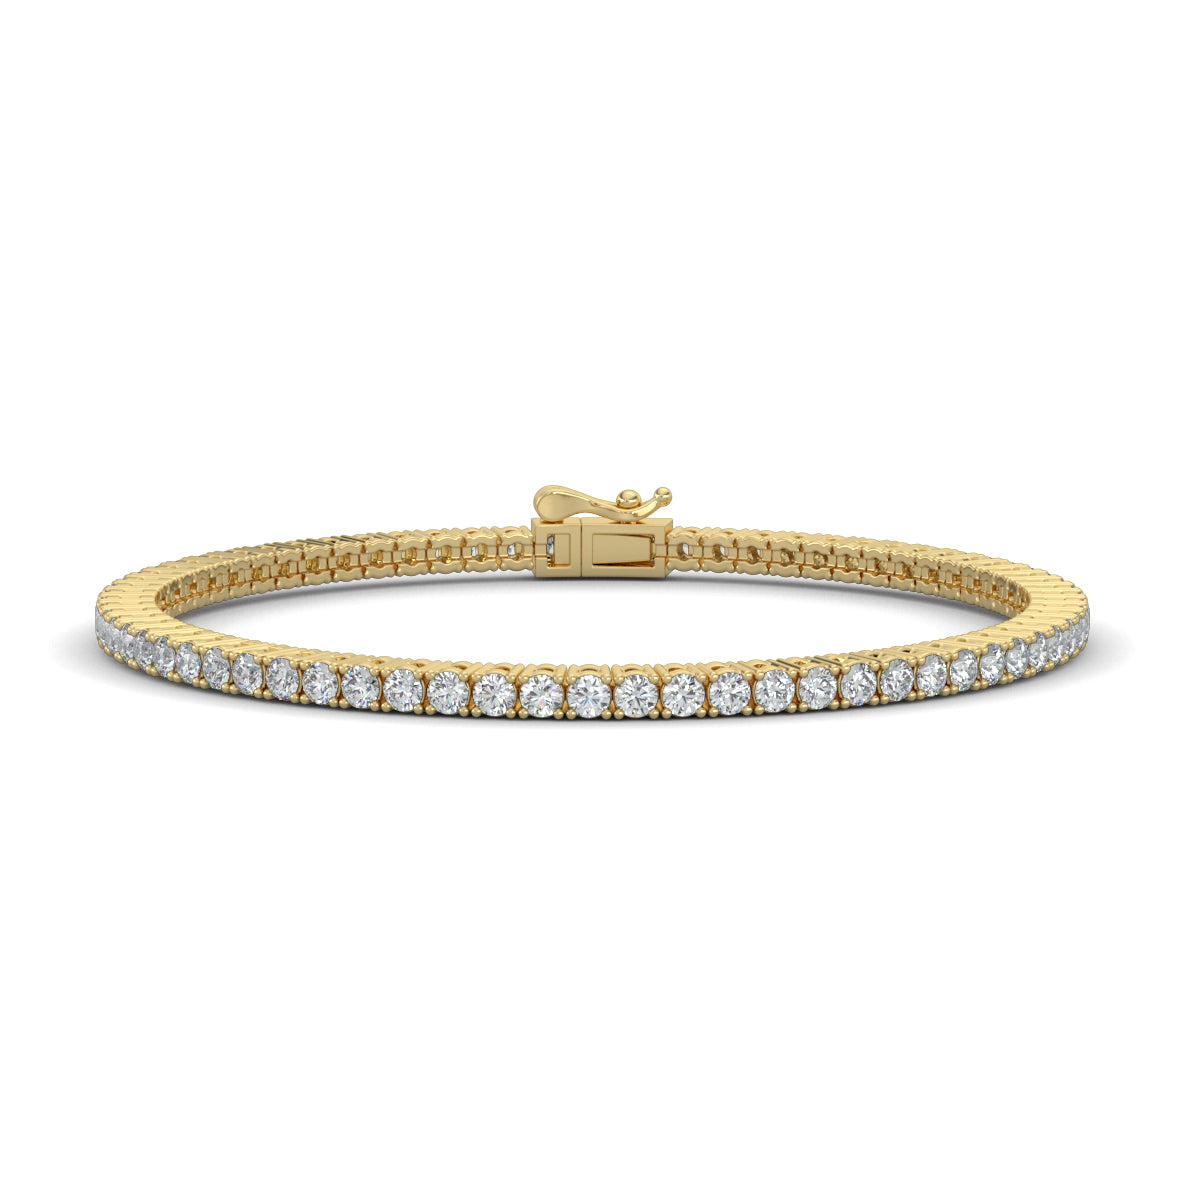 Yellow Gold, Diamond Bracelet, Natural diamond bracelet, Lab-grown diamond bracelet, 20-Pointer Tennis Bracelet, tennis bracelet, prong setting, jewelry